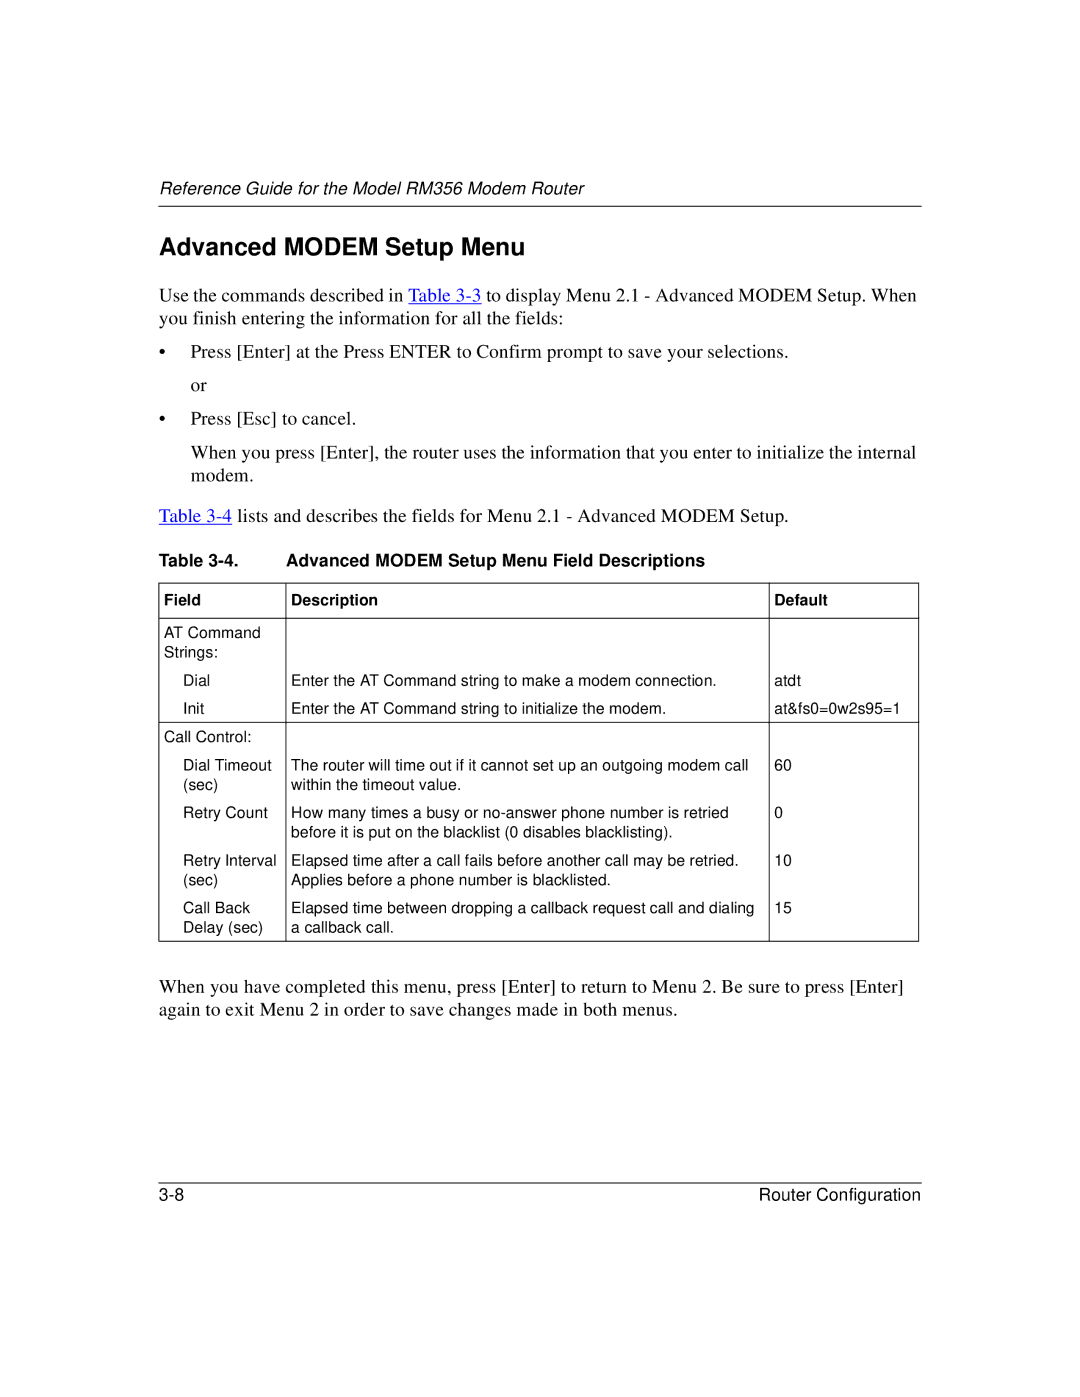 Bay Technical Associates RM356 manual Advanced Modem Setup Menu Field Descriptions, Field Description Default 